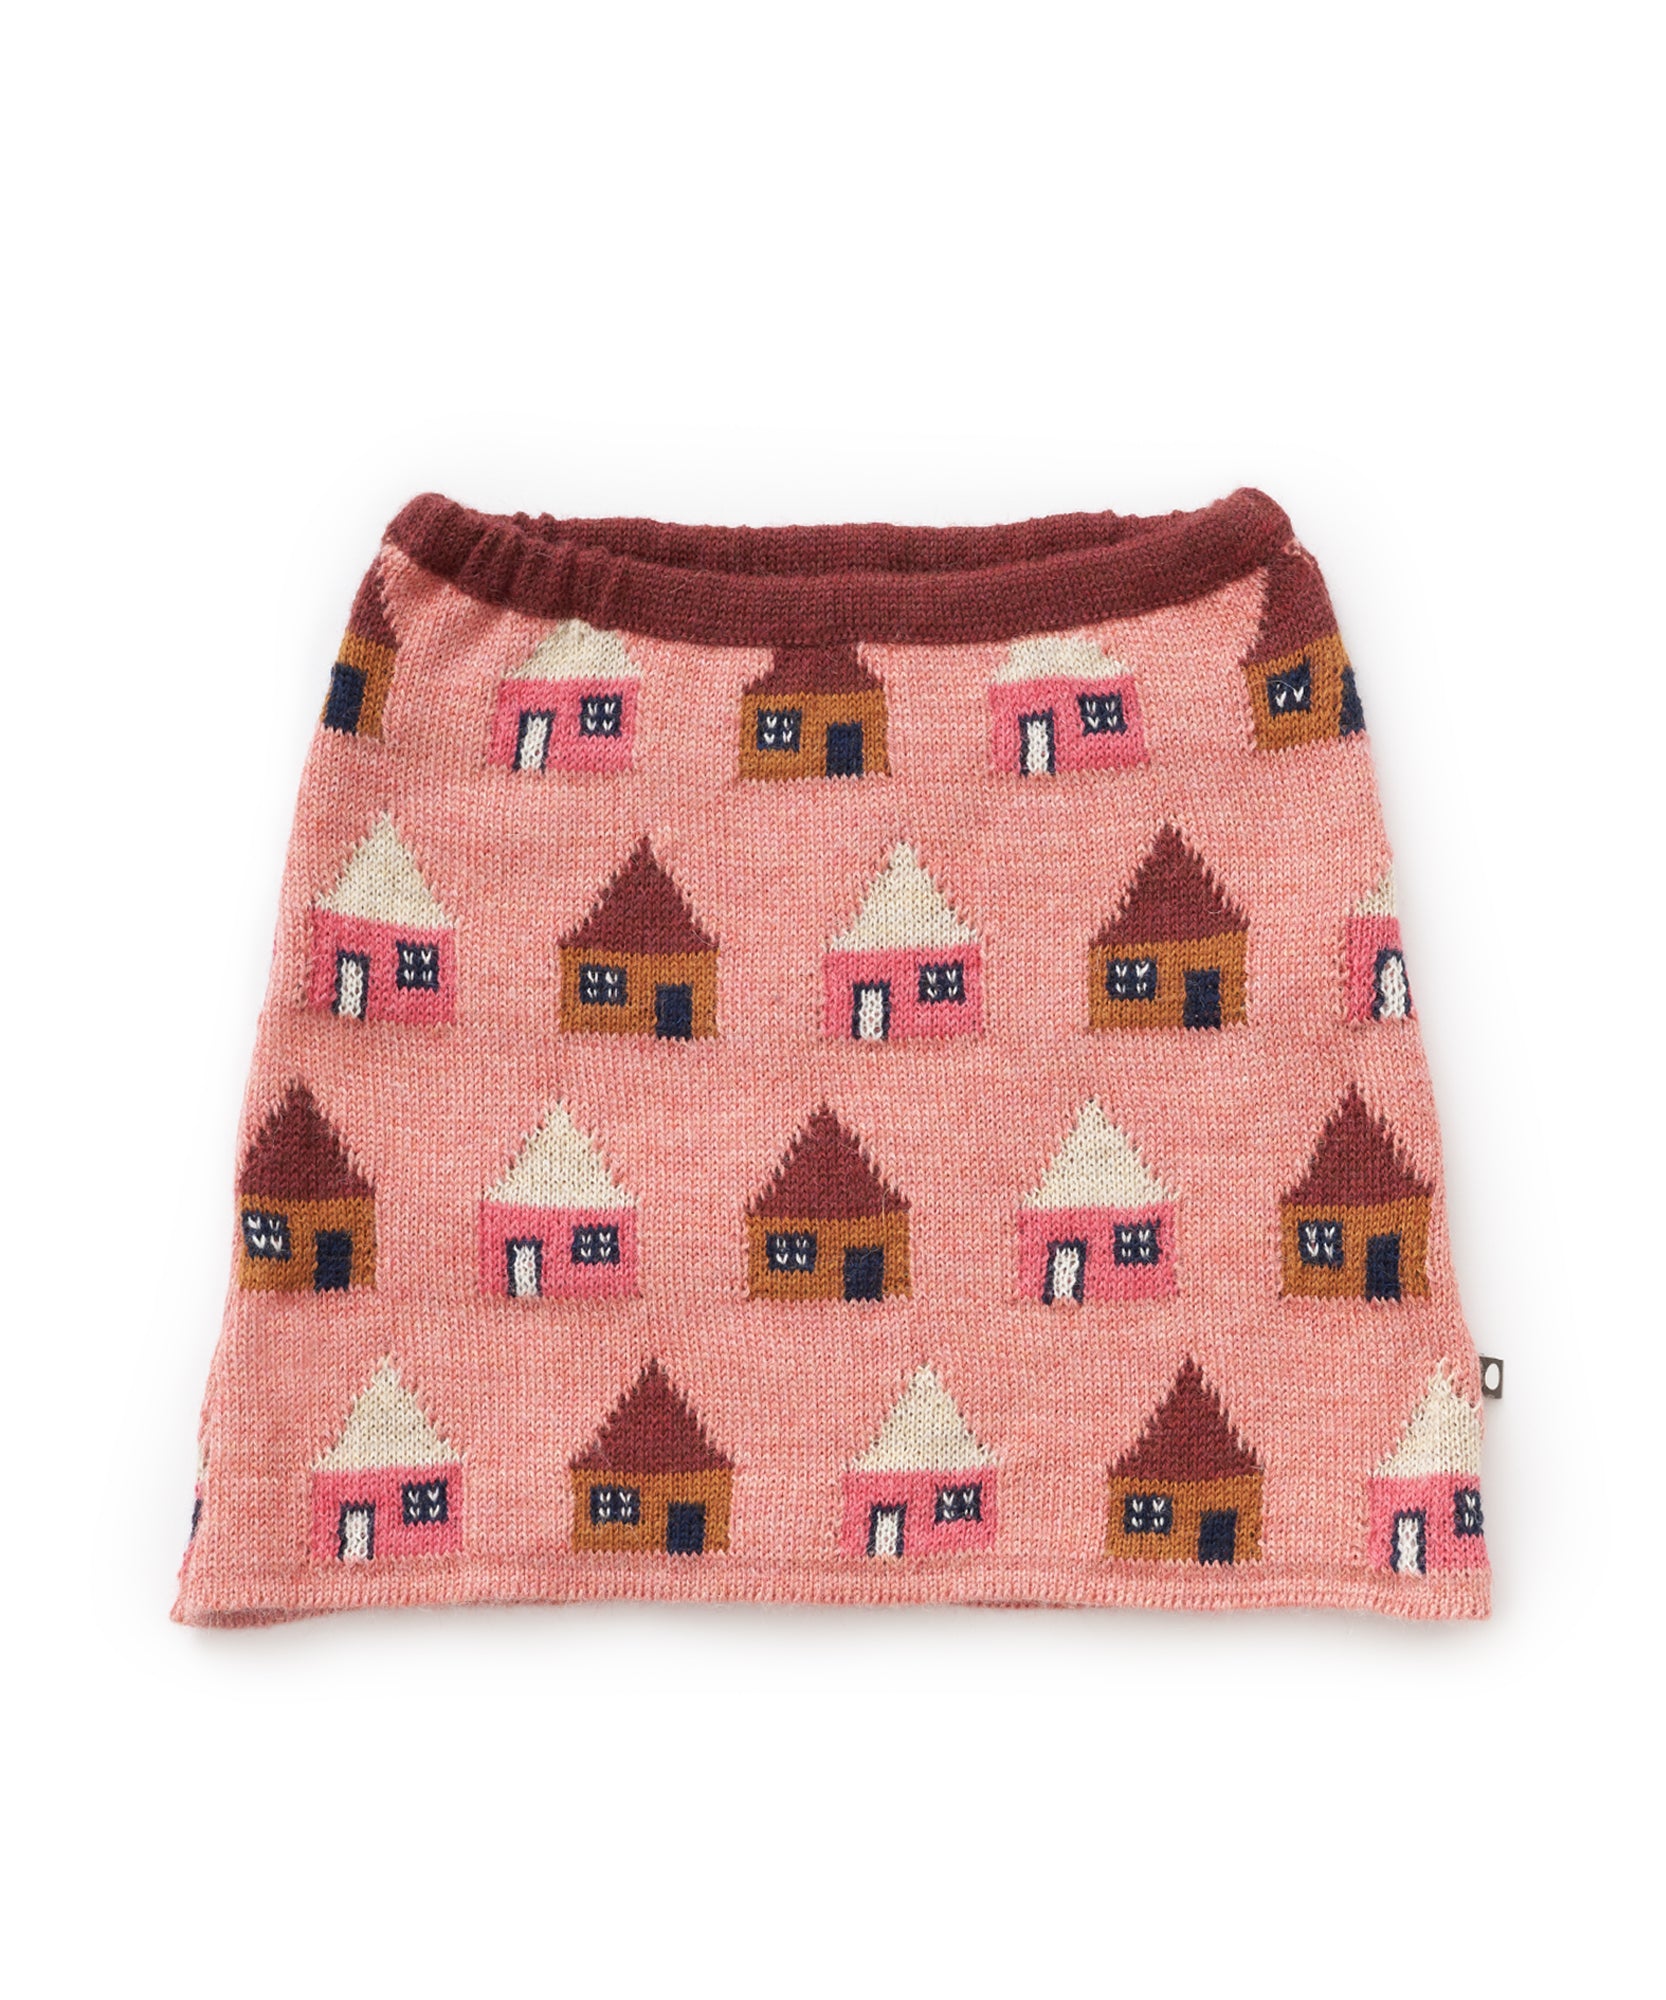 House Motif Skirt